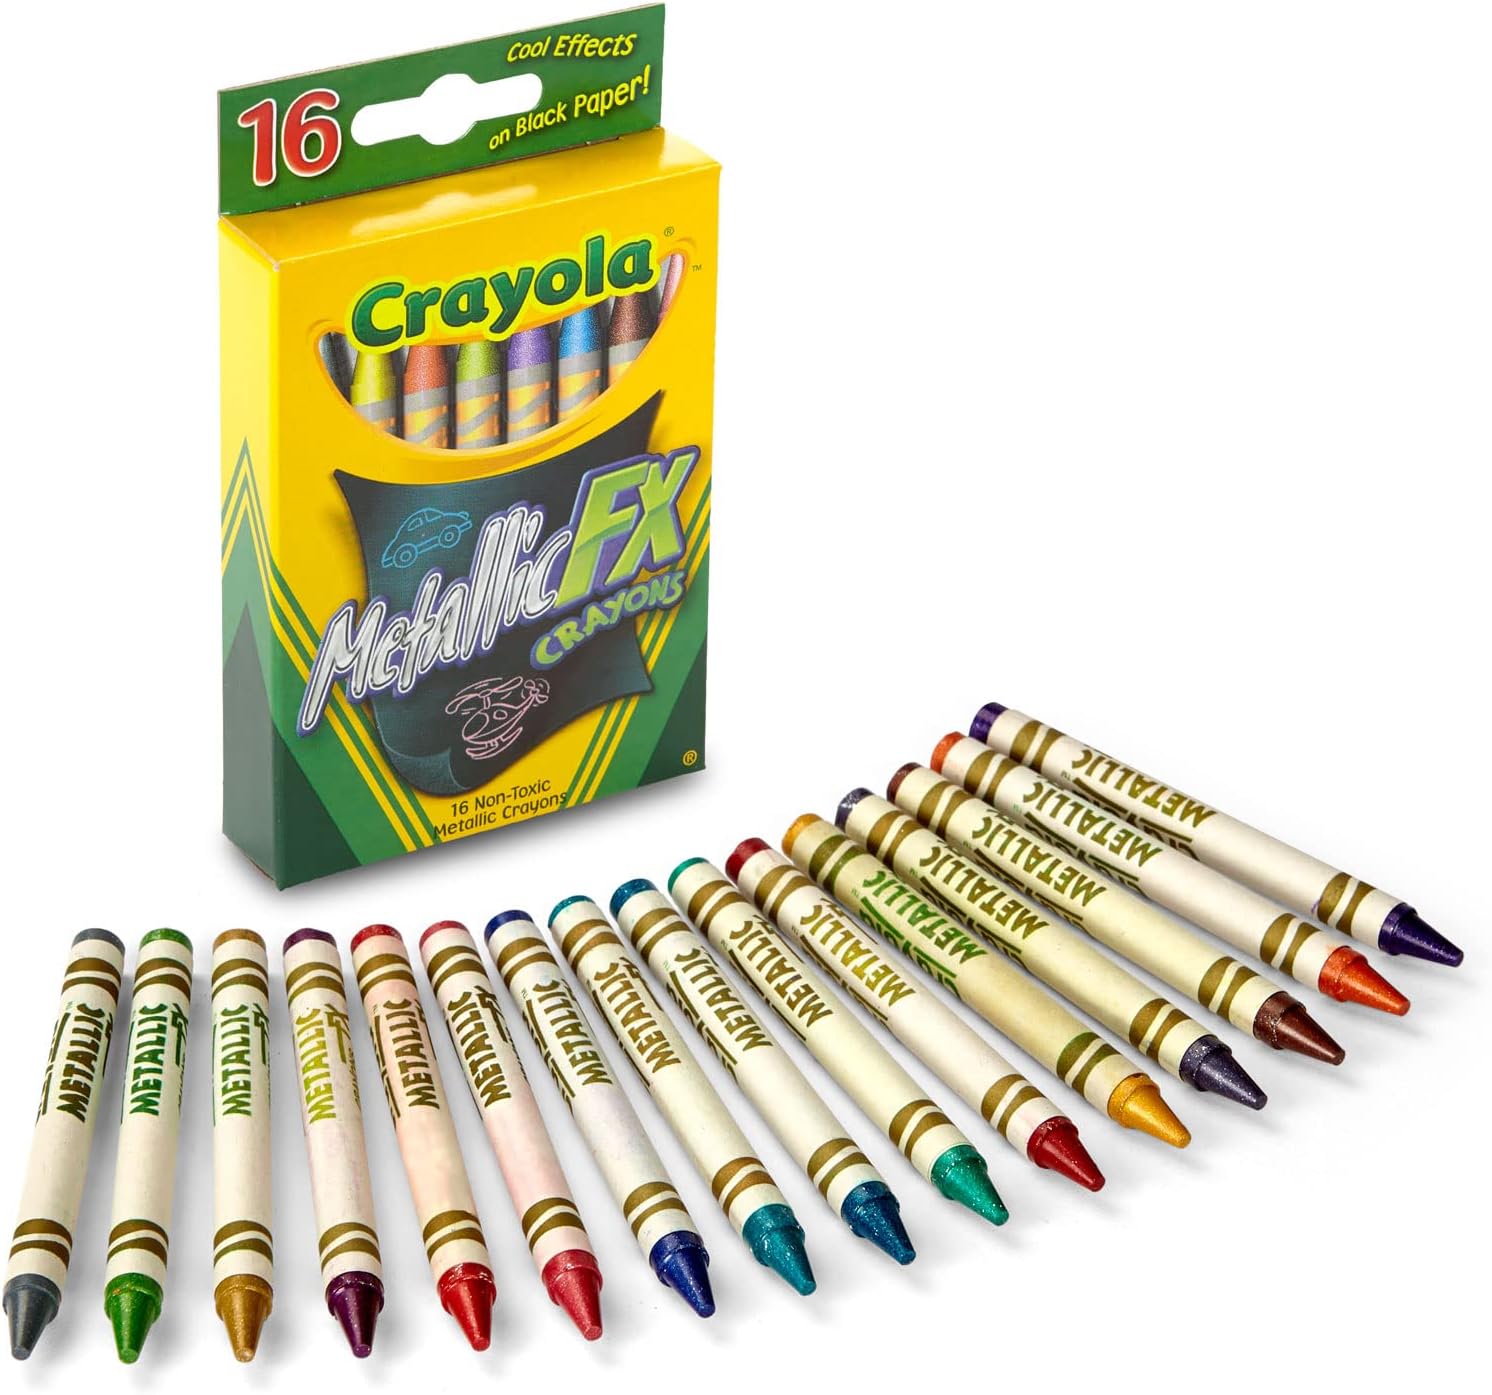 Crayola Metallic Color FX Crayons Pack of 16 528816